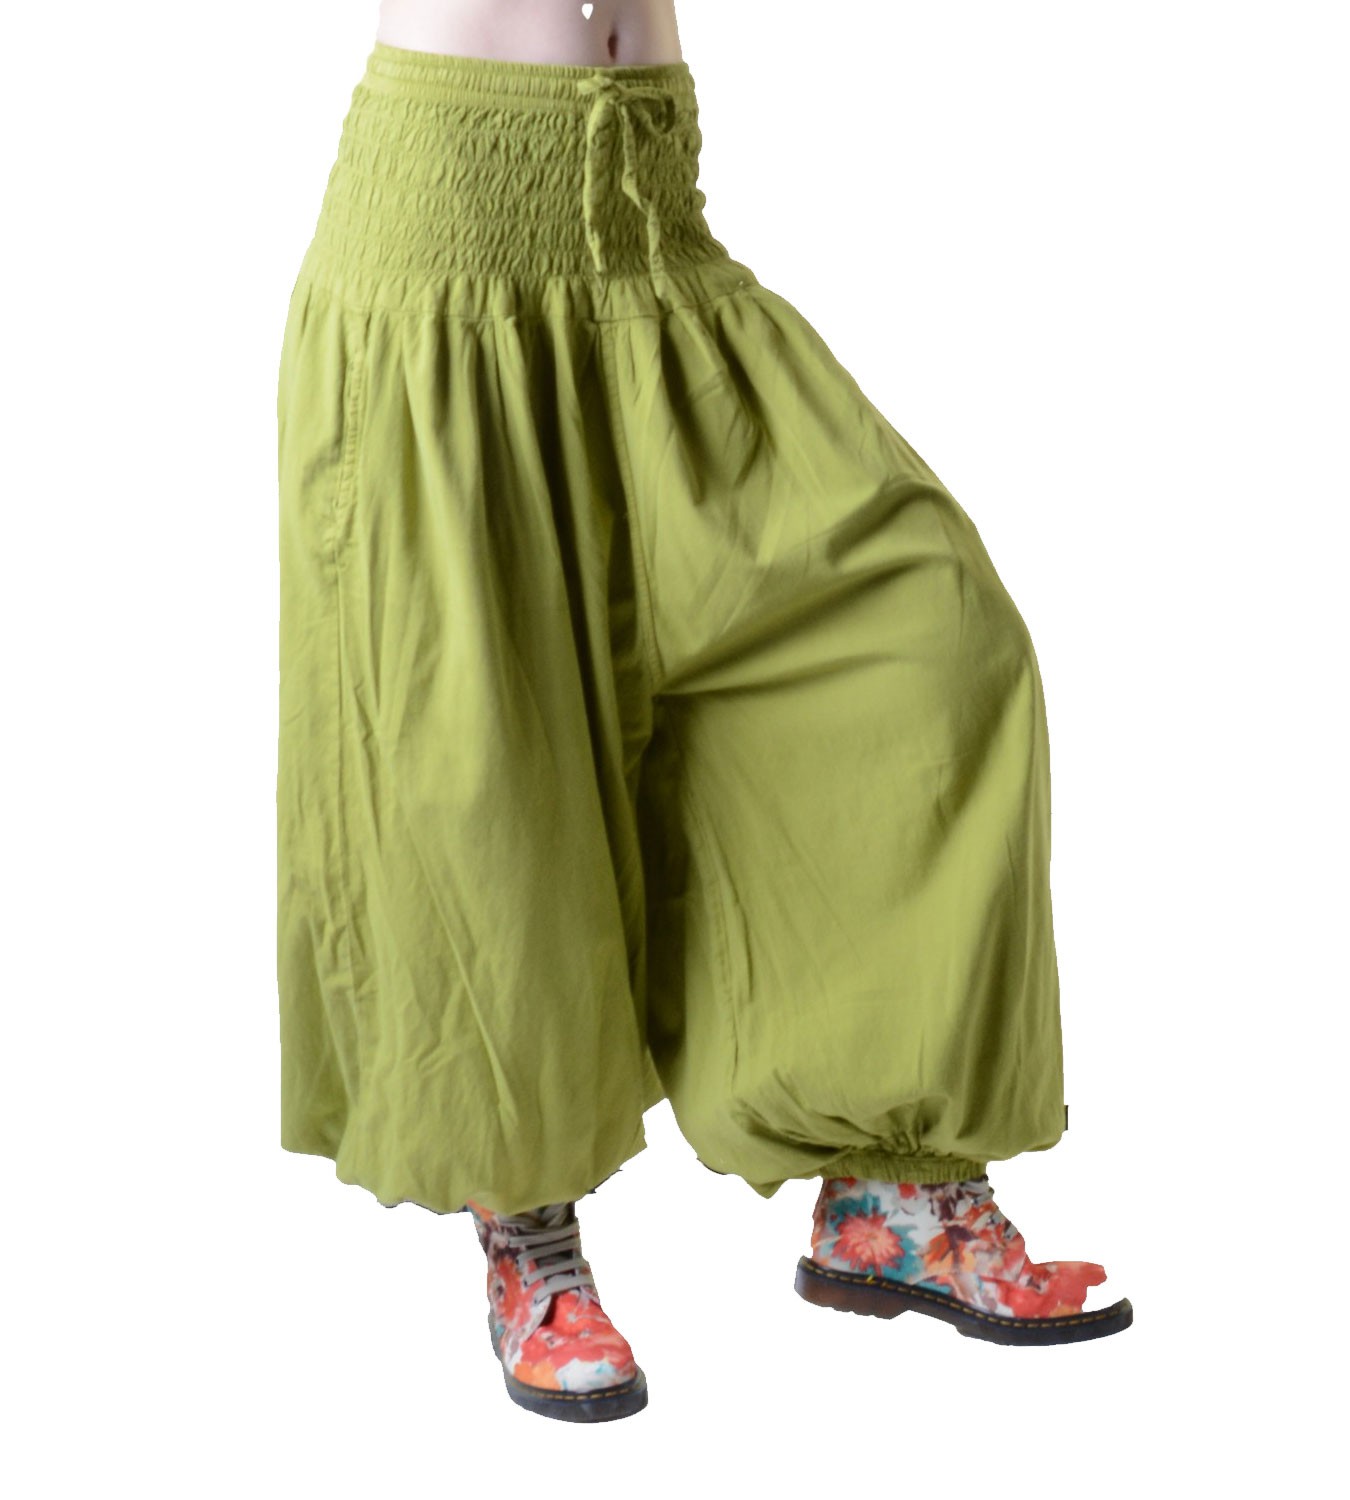 Baggy trousers in Haremshosenstyle harem pants aladin pants Medieval | eBay